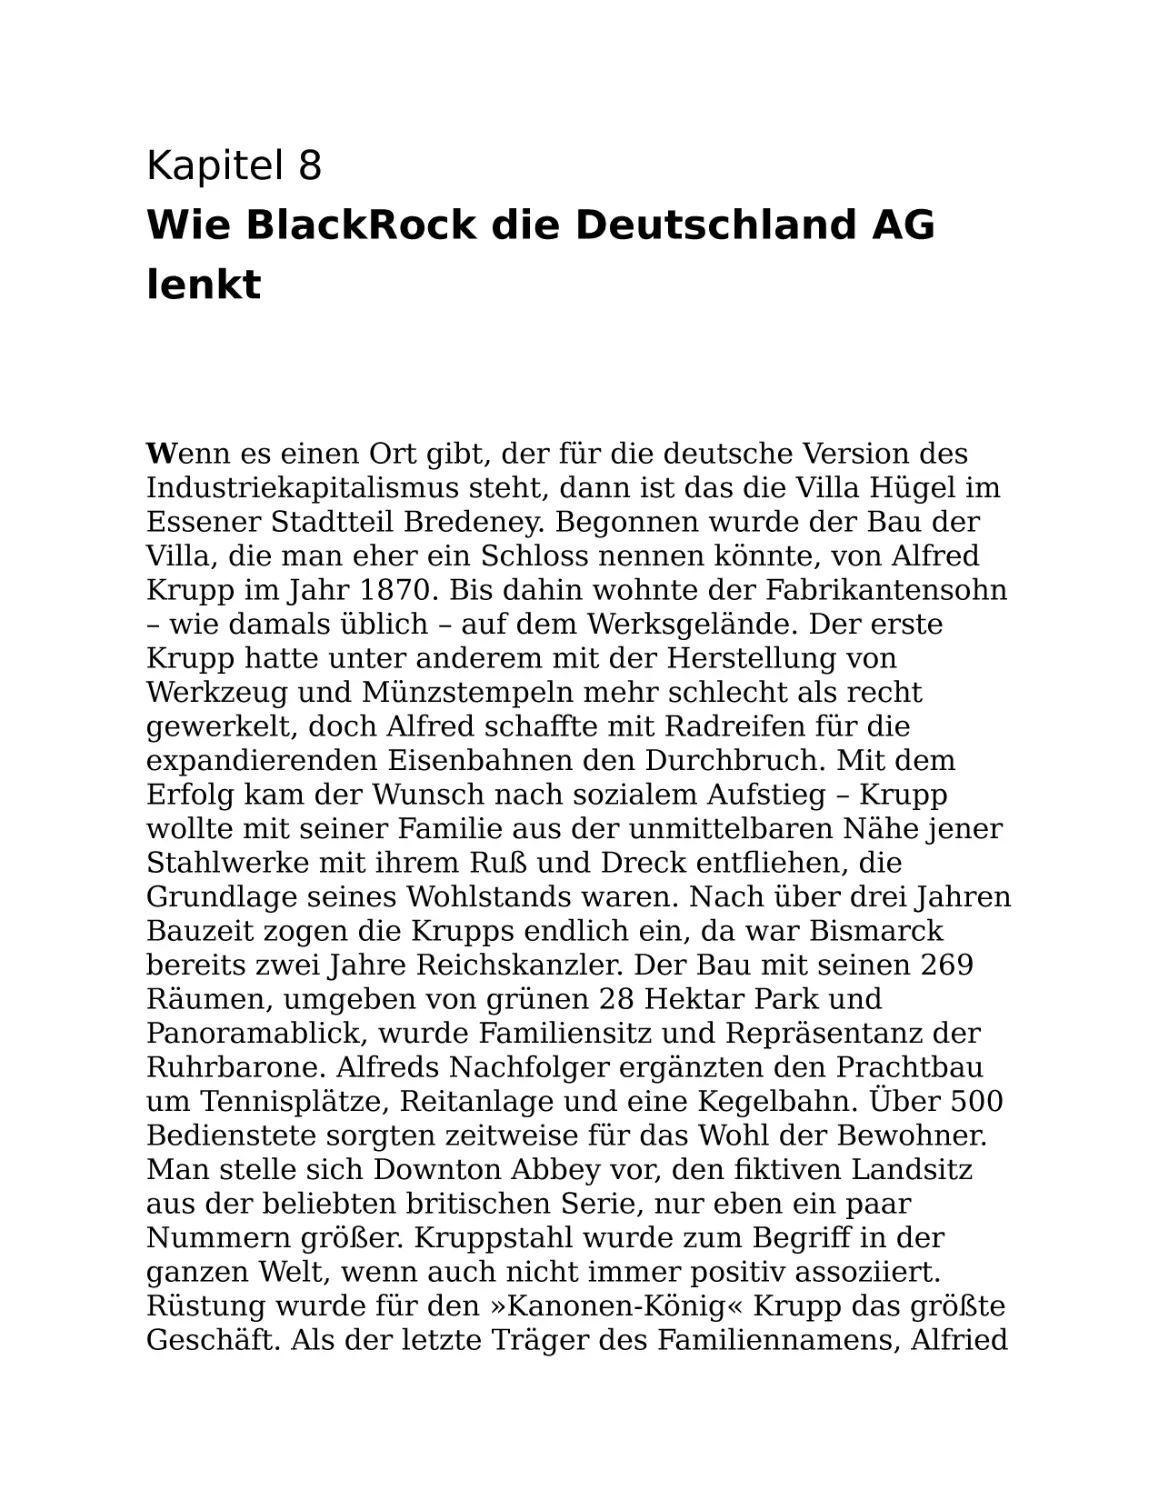 Kapitel 8 Wie BlackRock die Deutschland AG lenkt